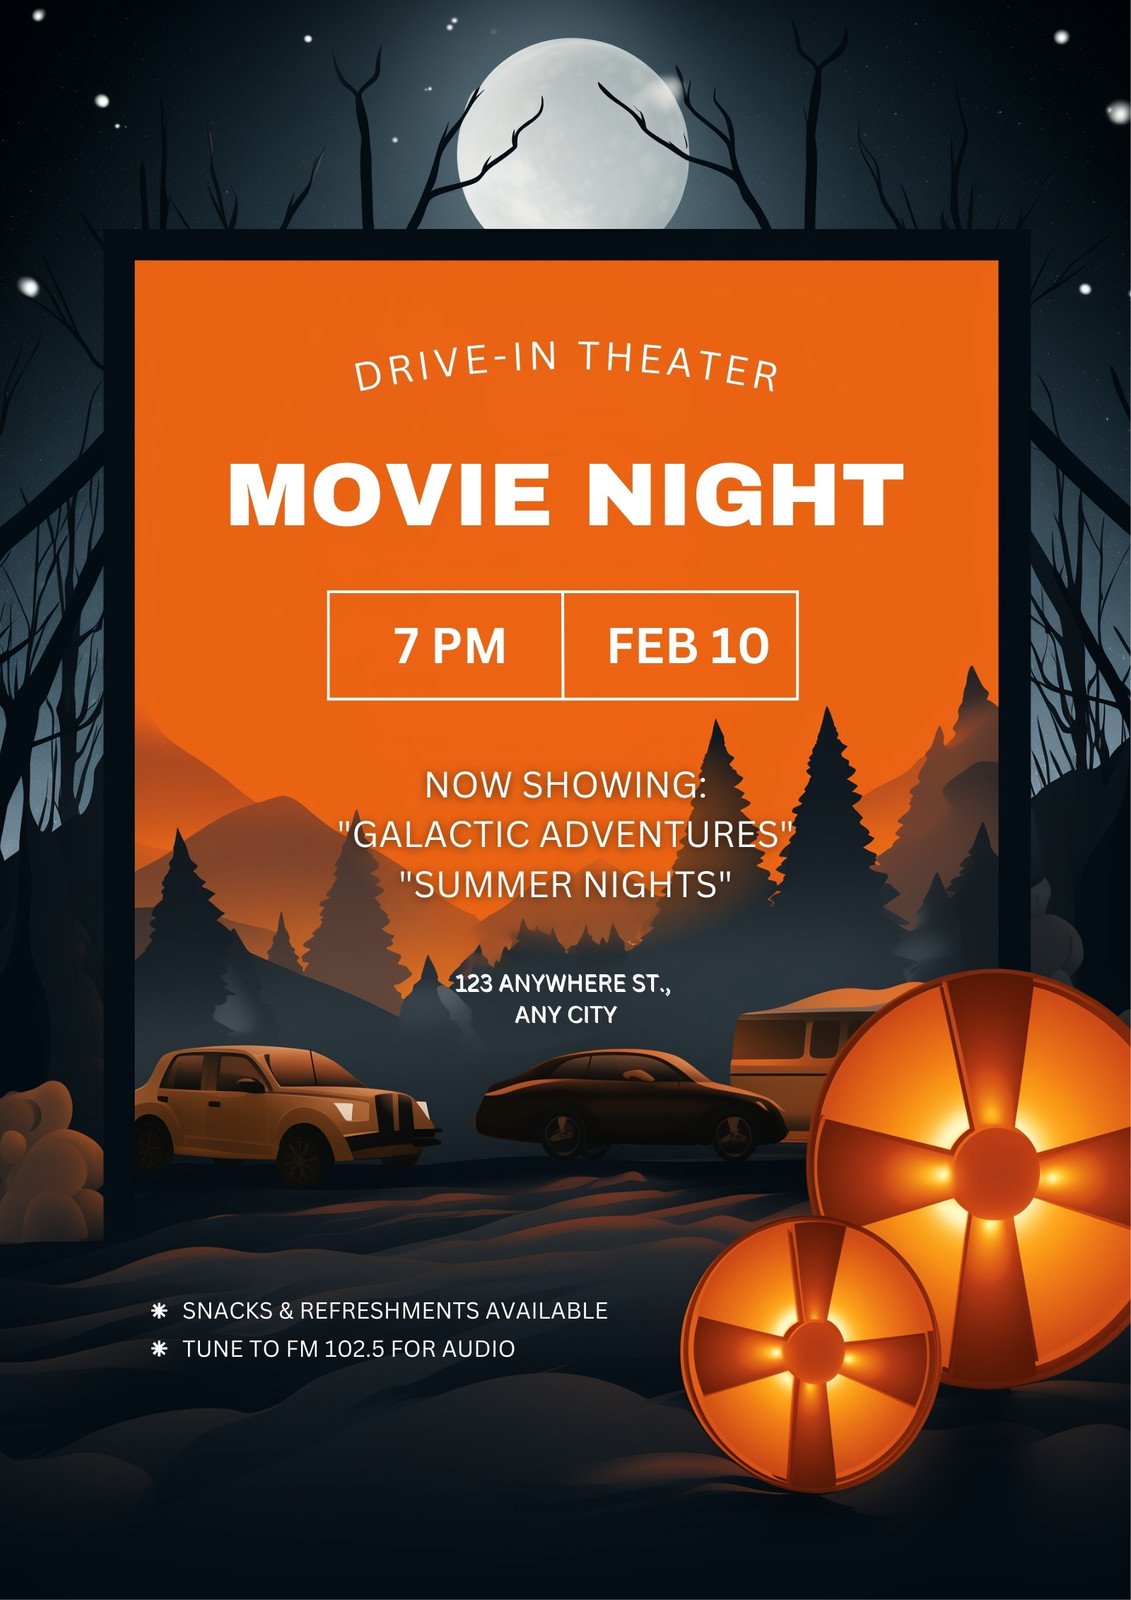 Orange And Black Illustrative Drive-in Theater Movie Night Poster